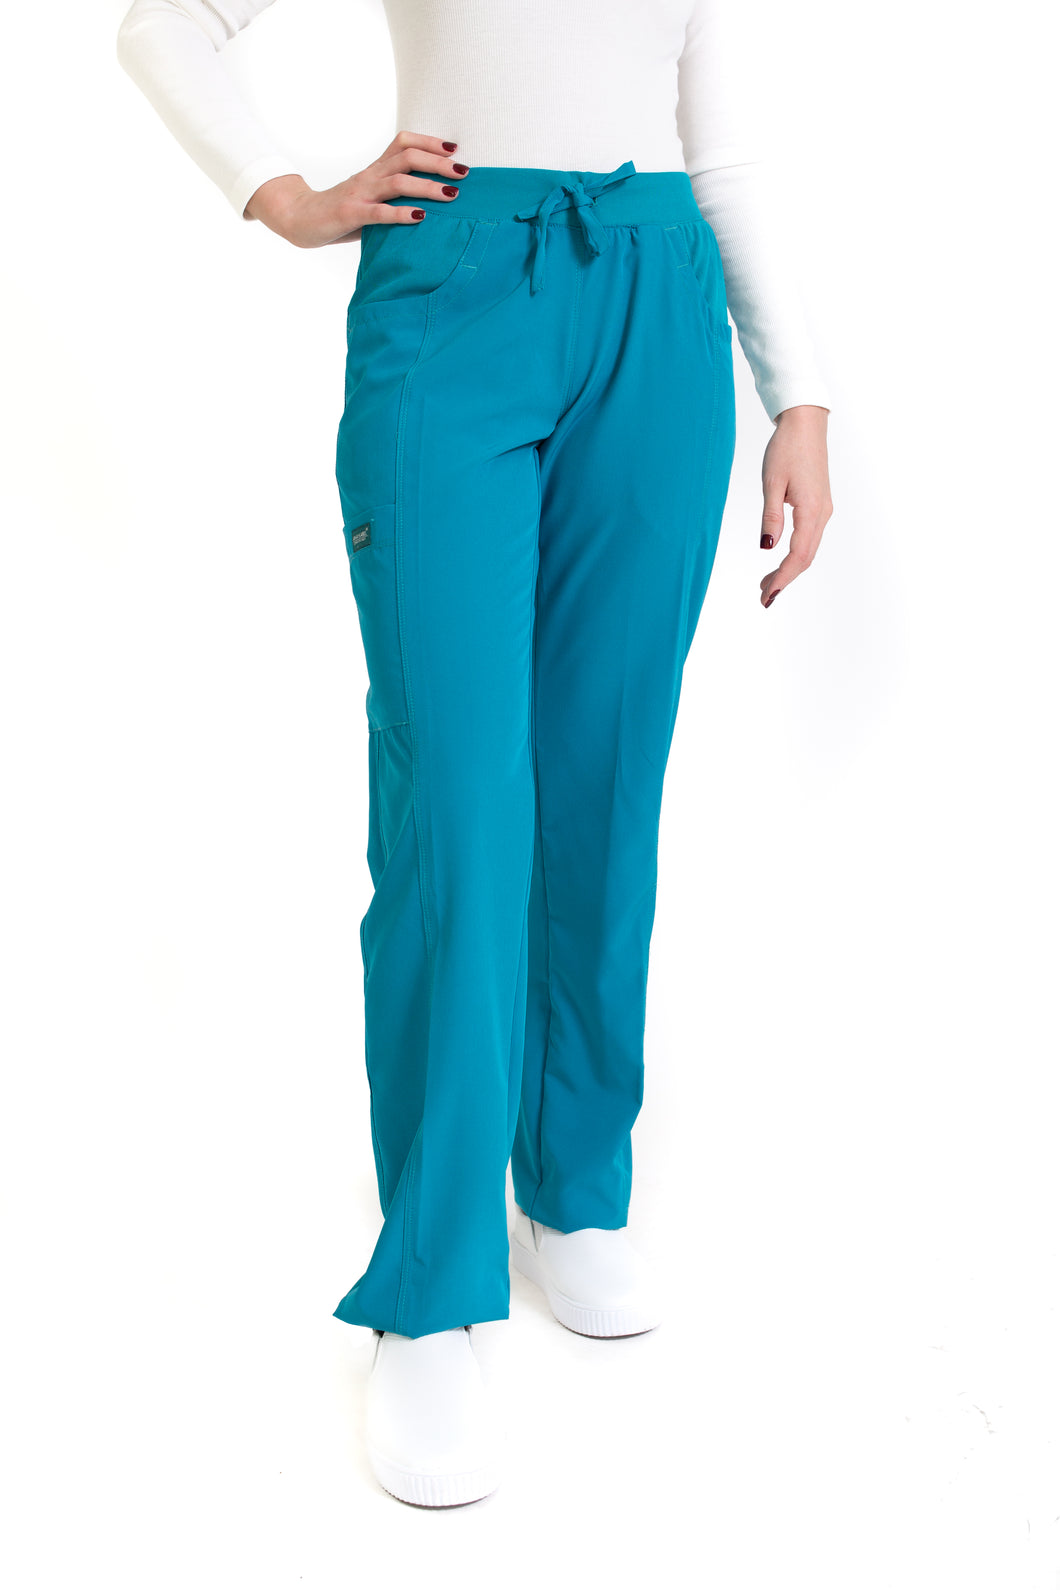 Pantalón Pant EV-120 REPELENTE A FLUIDOS-Color VERDE Dama-Ana Isabel Uniformes